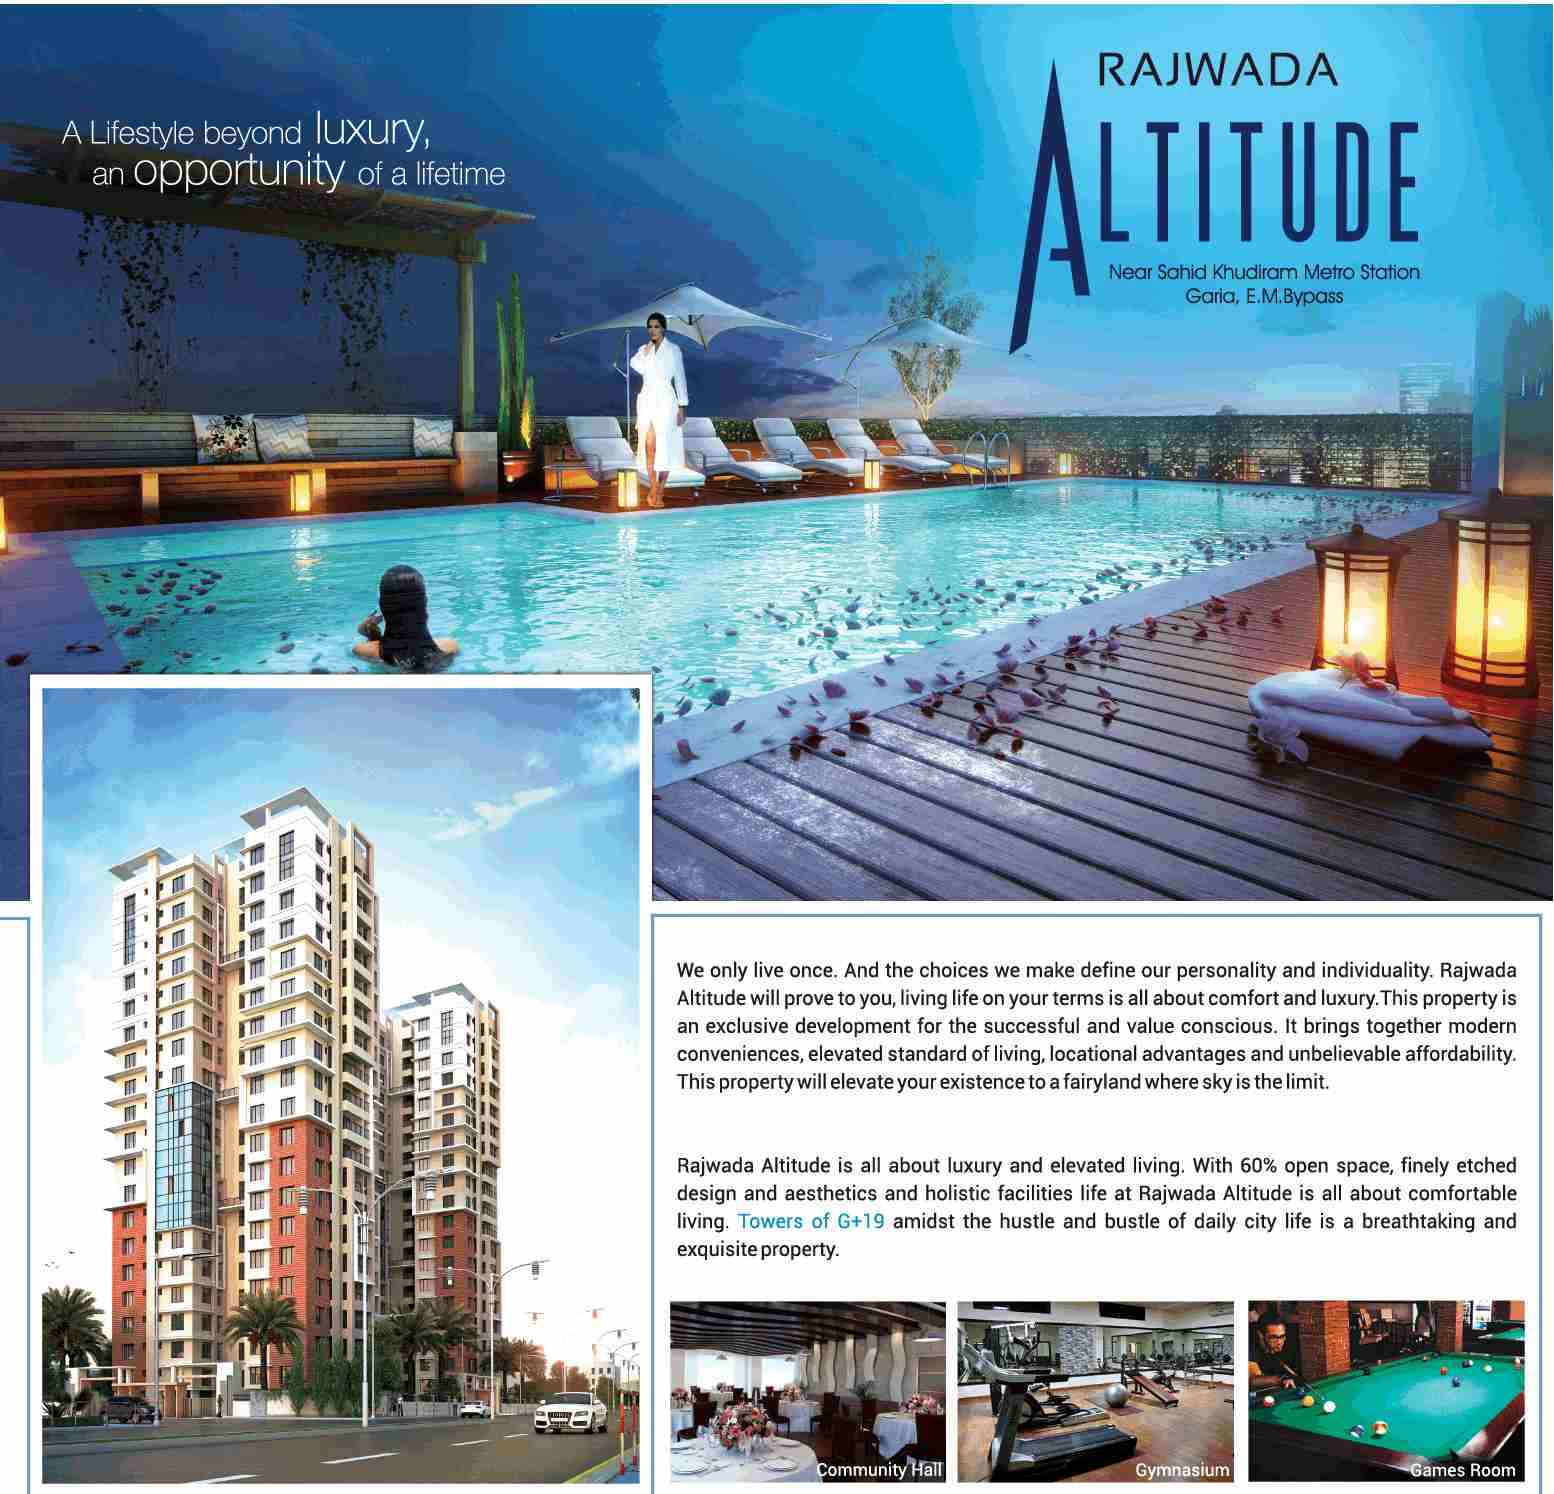 Experience lifestyle beyond luxury & opportunity of lifetime at Rajwada Altitude in Kolkata Update